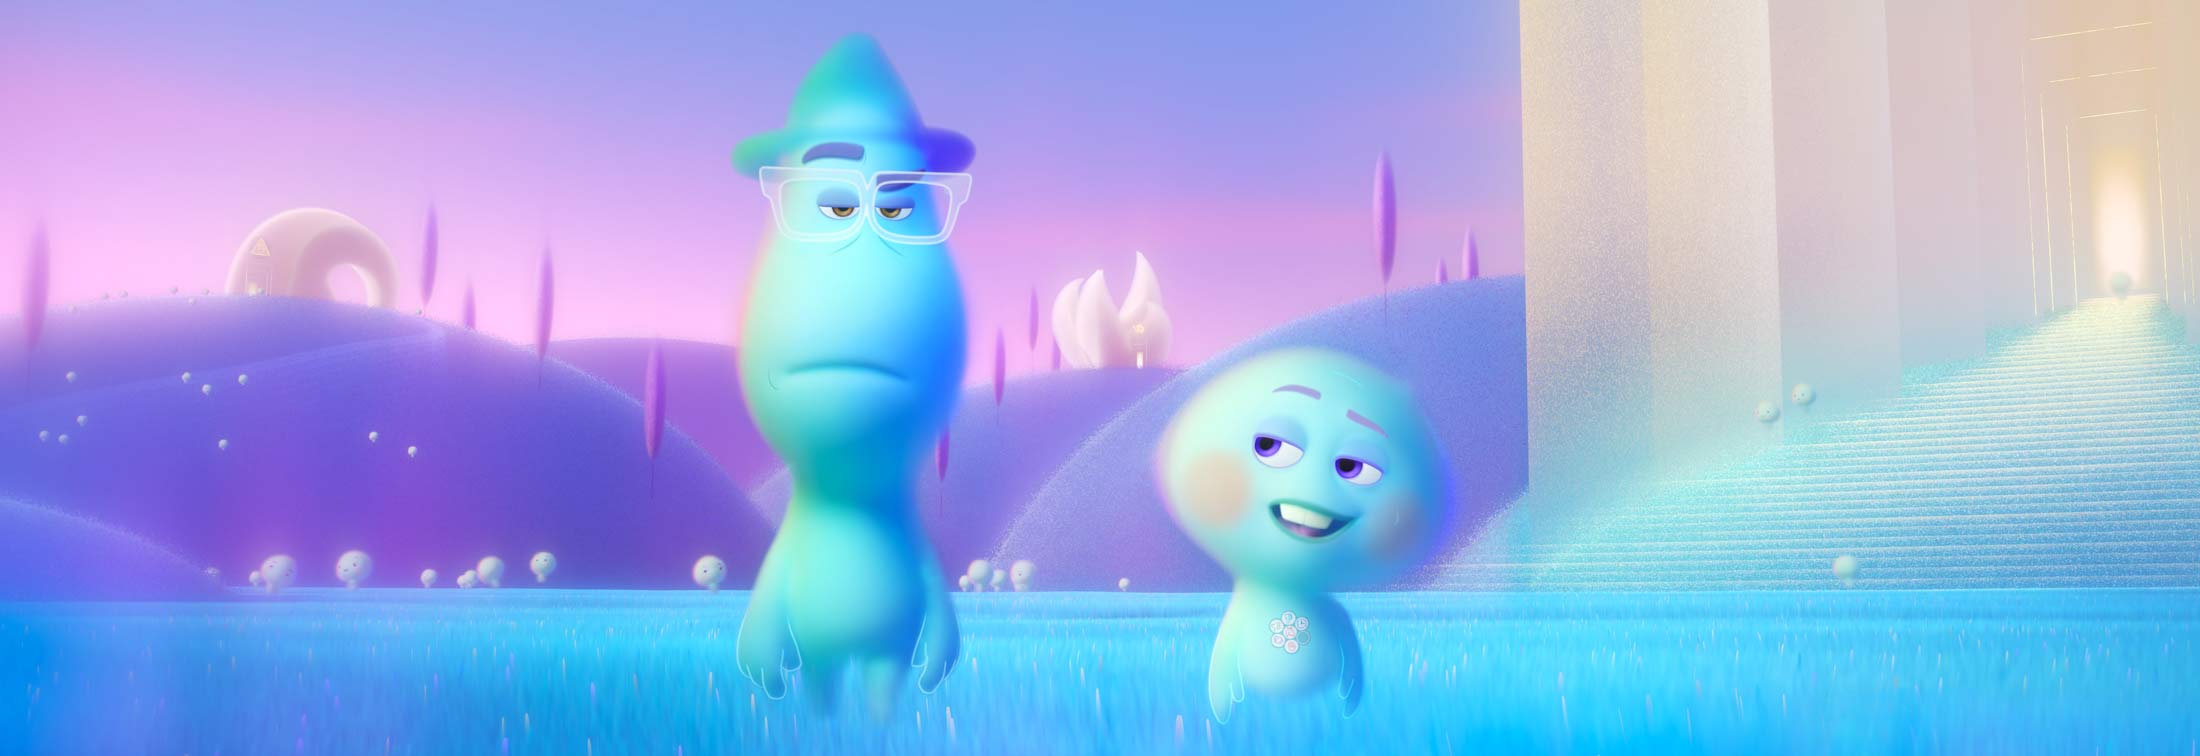 Soul - Pixar's finest work in years